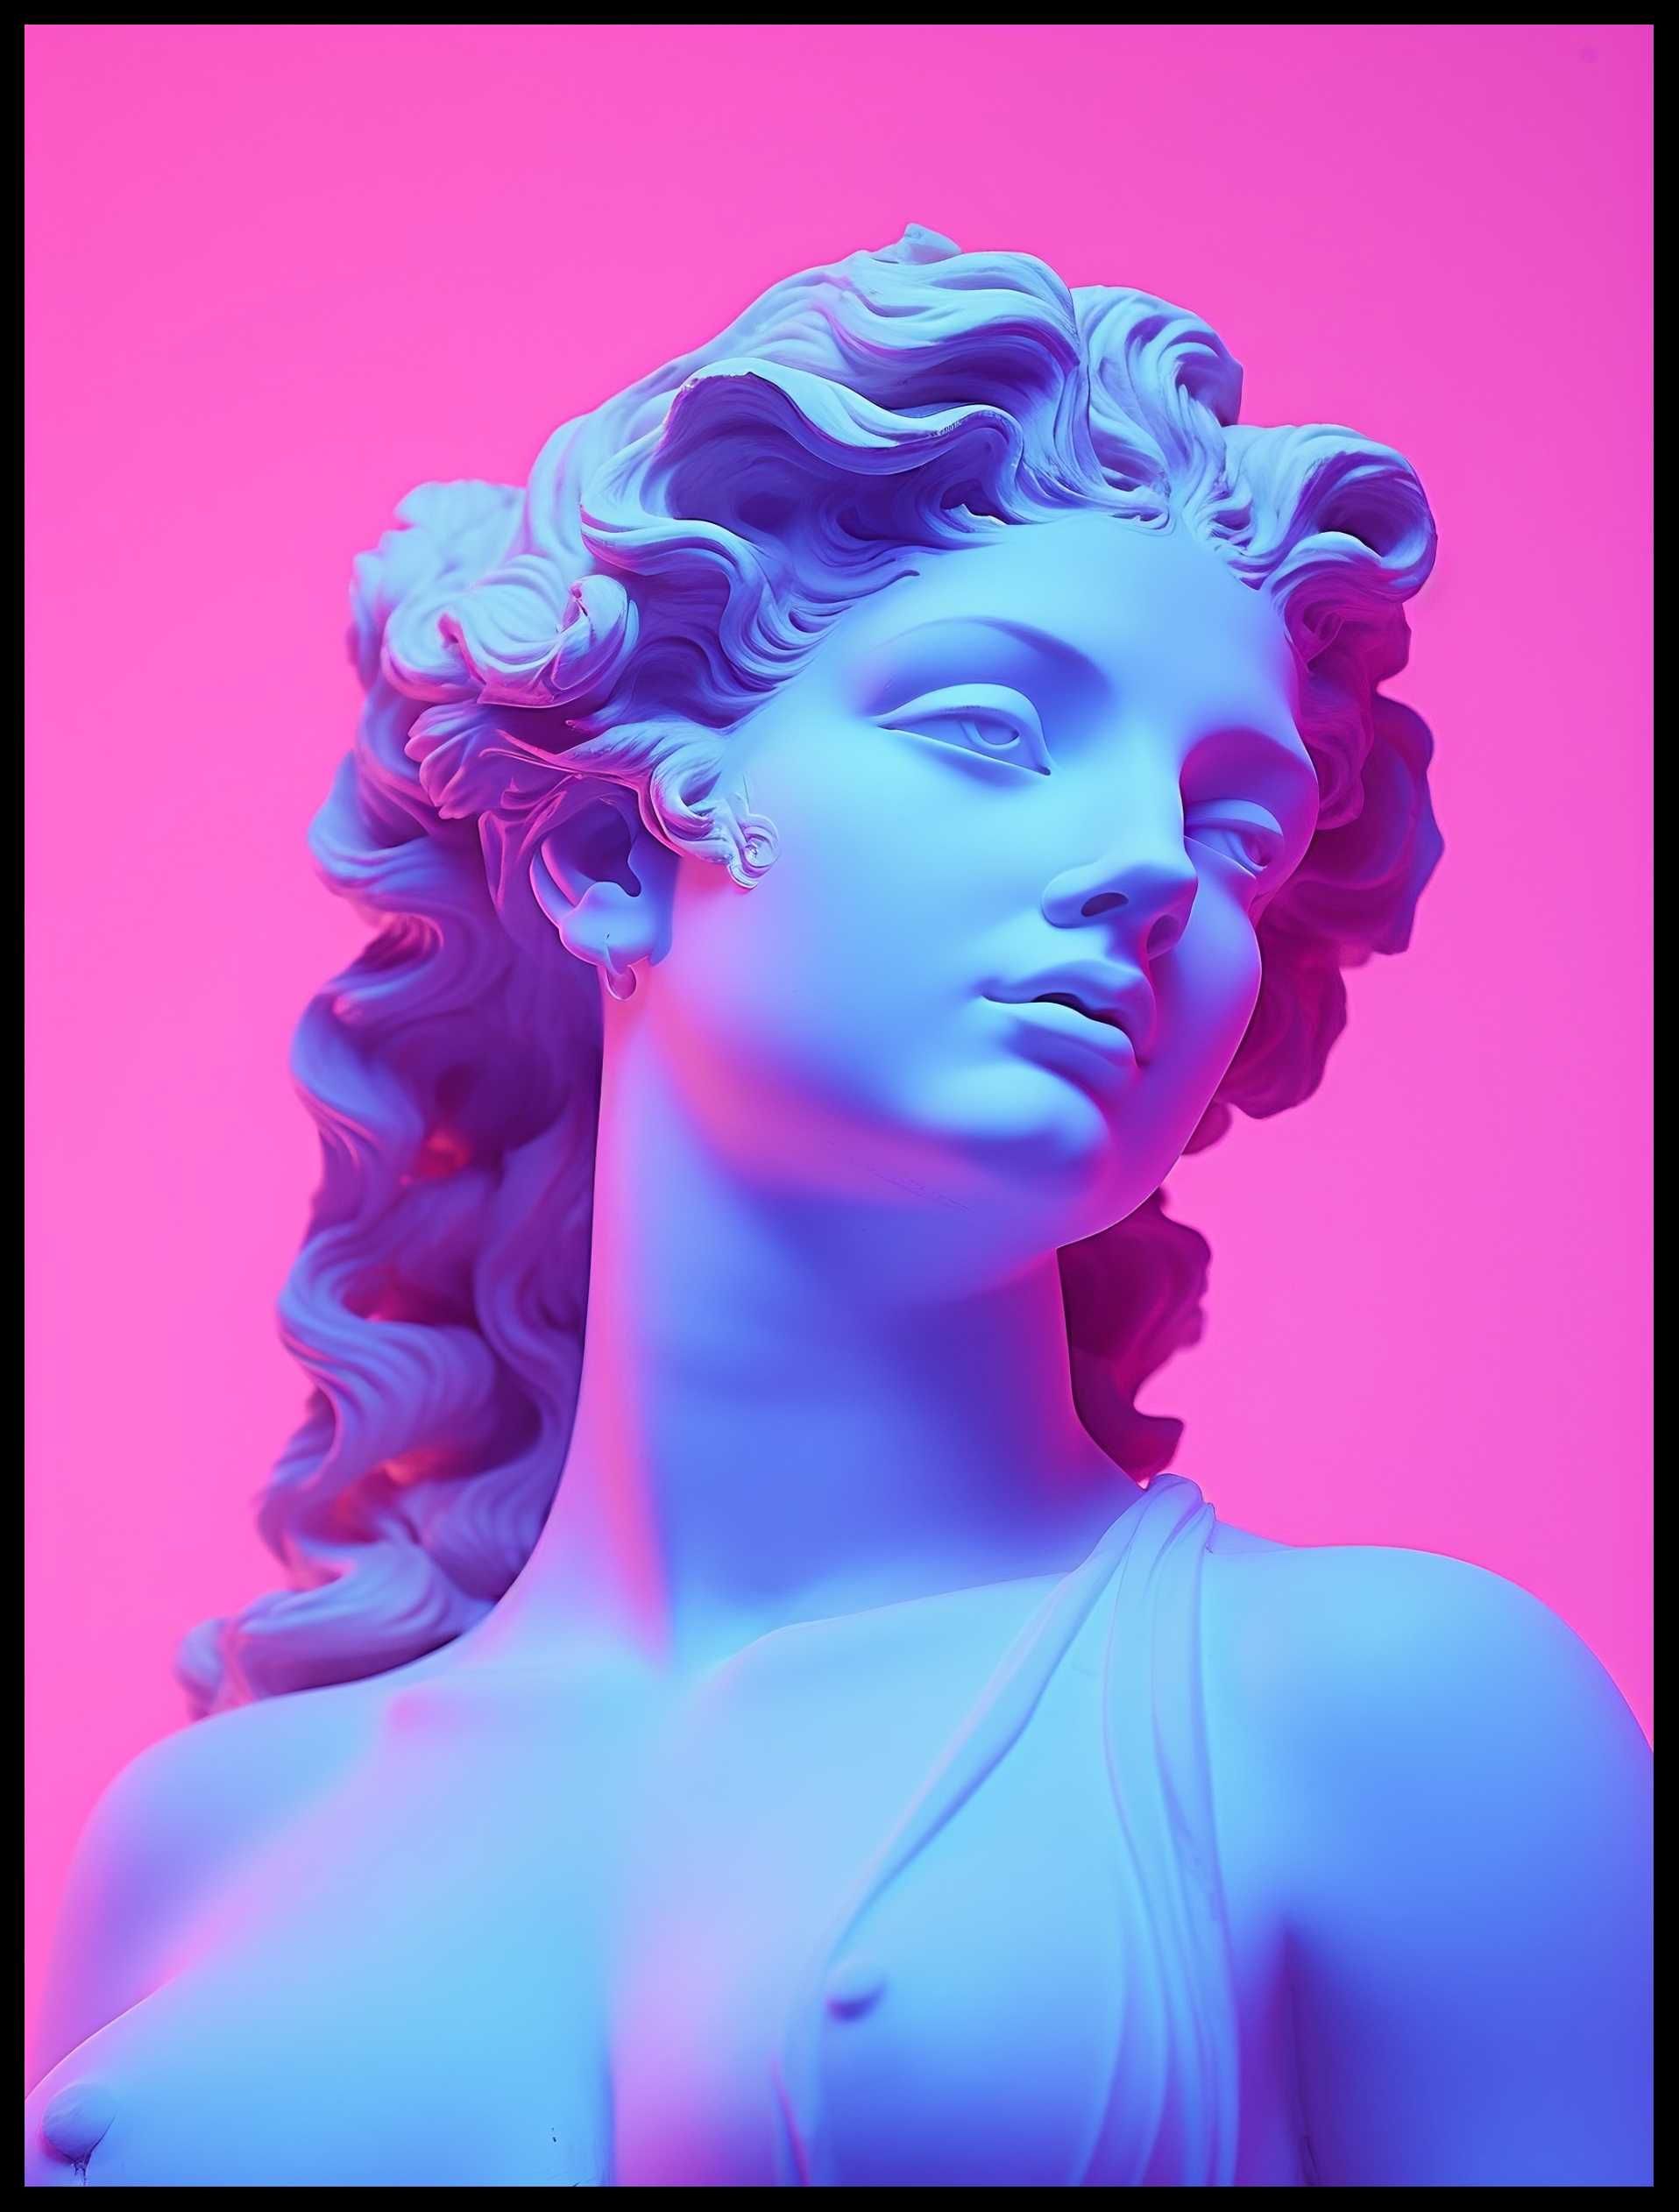 Plakat na Ścianę Obraz Kobieta Rzeźba Neon Sztuka 50x70 cm Premium